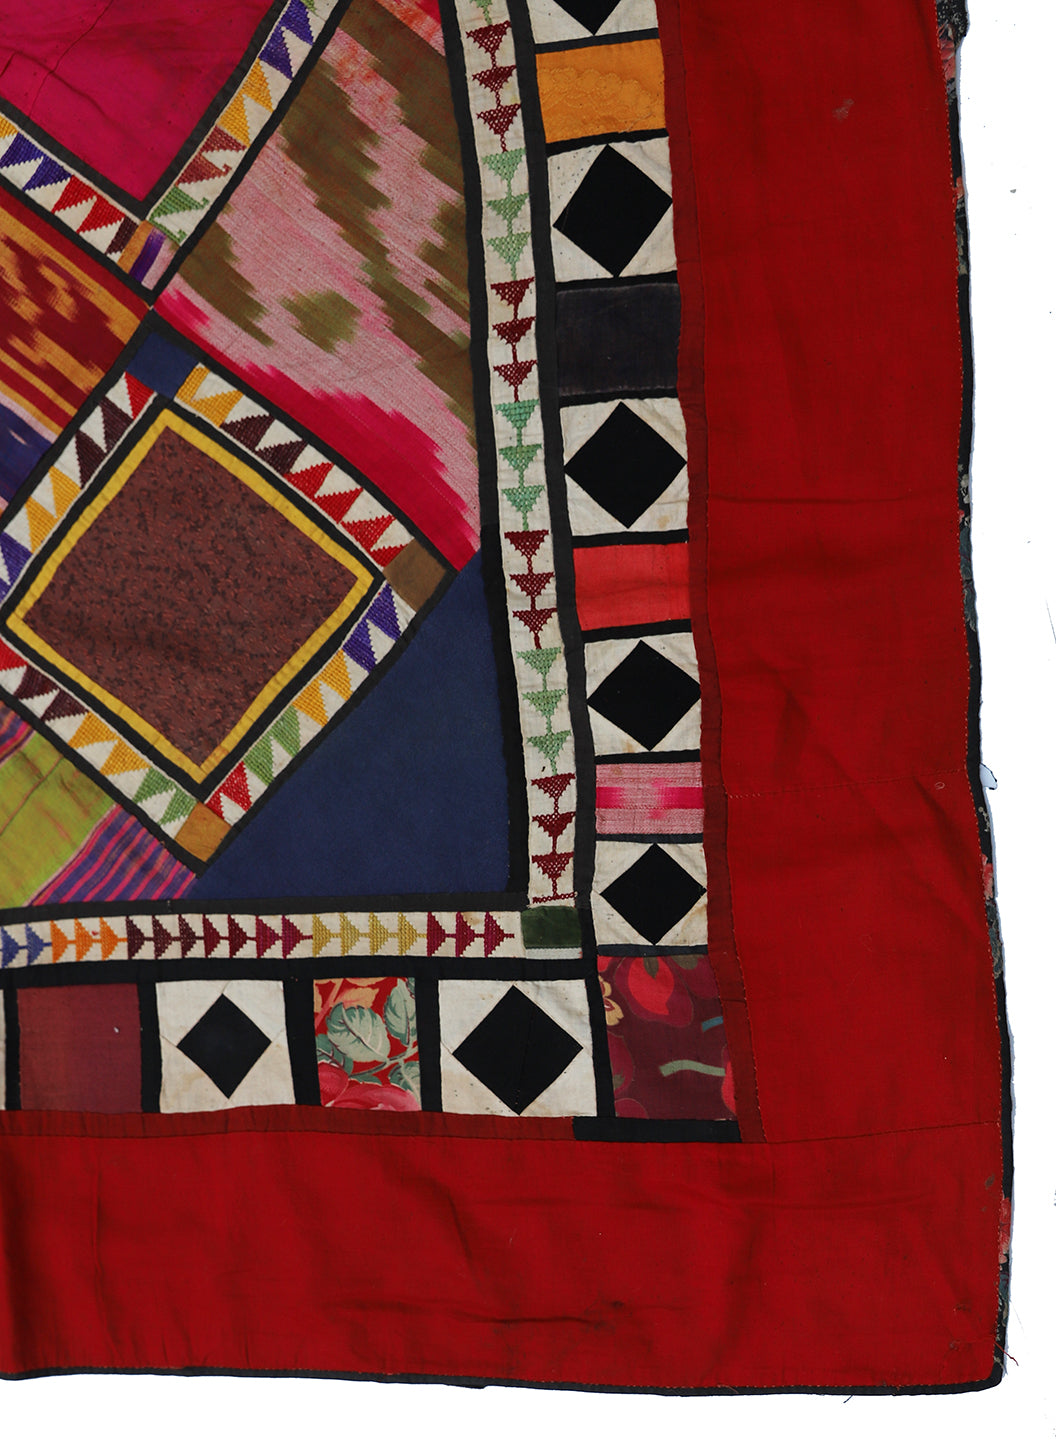 4'x6' Vintage Embroidered Uzbek Wall Hung Patchwork Tapestry